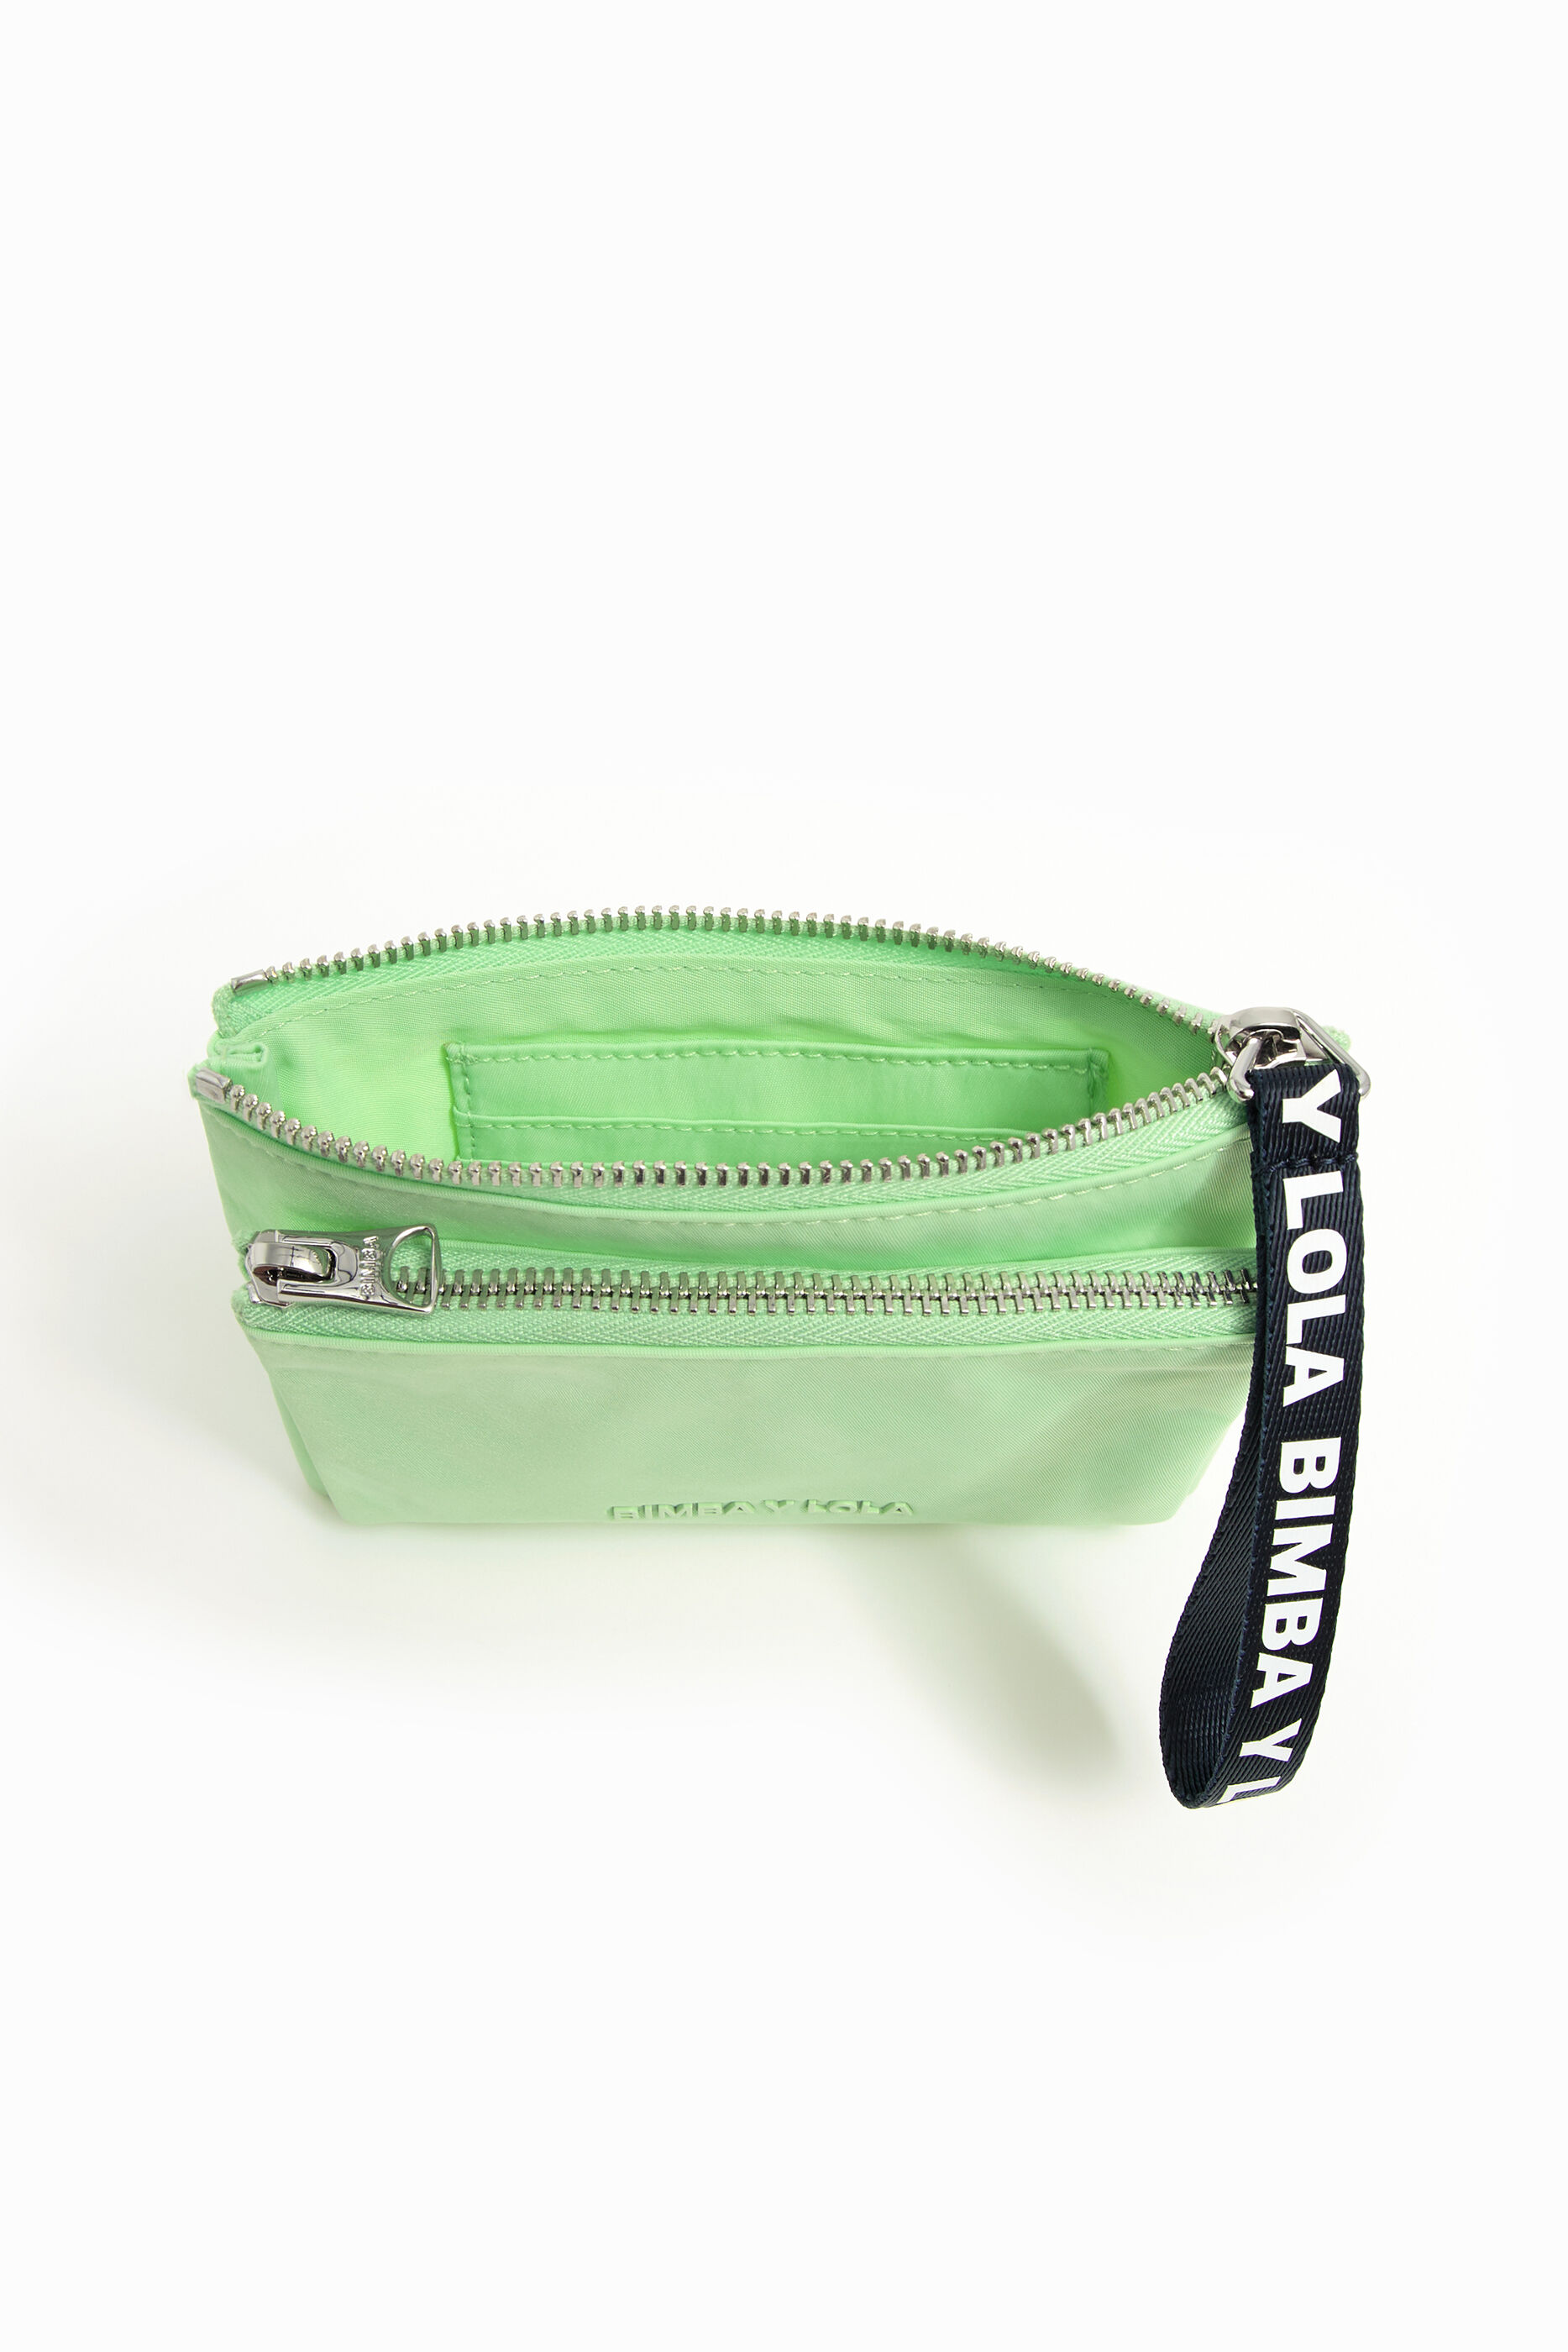 Green nylon purse